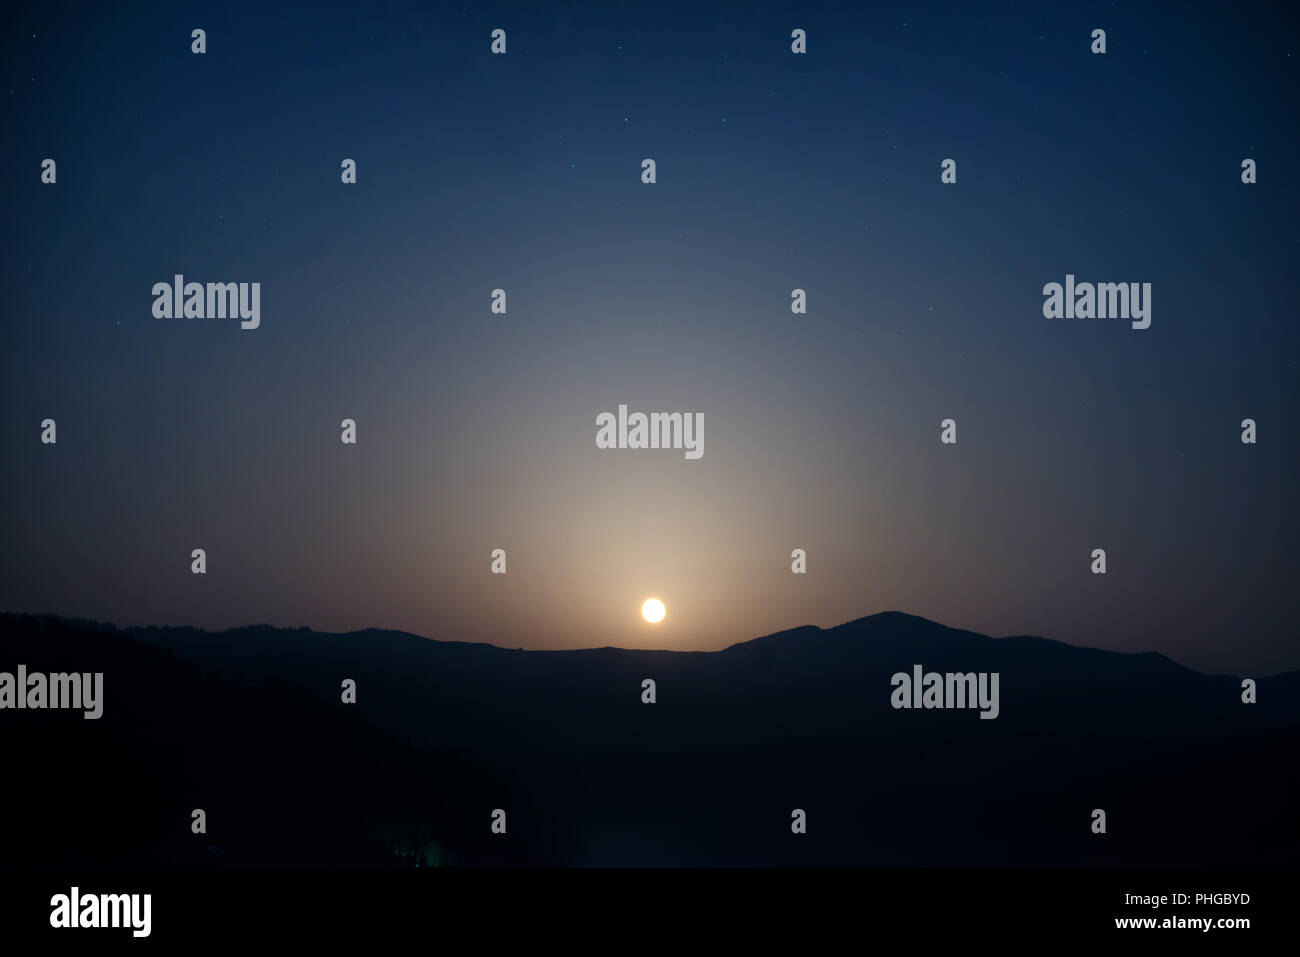 Moon rising on night sky Stock Photo